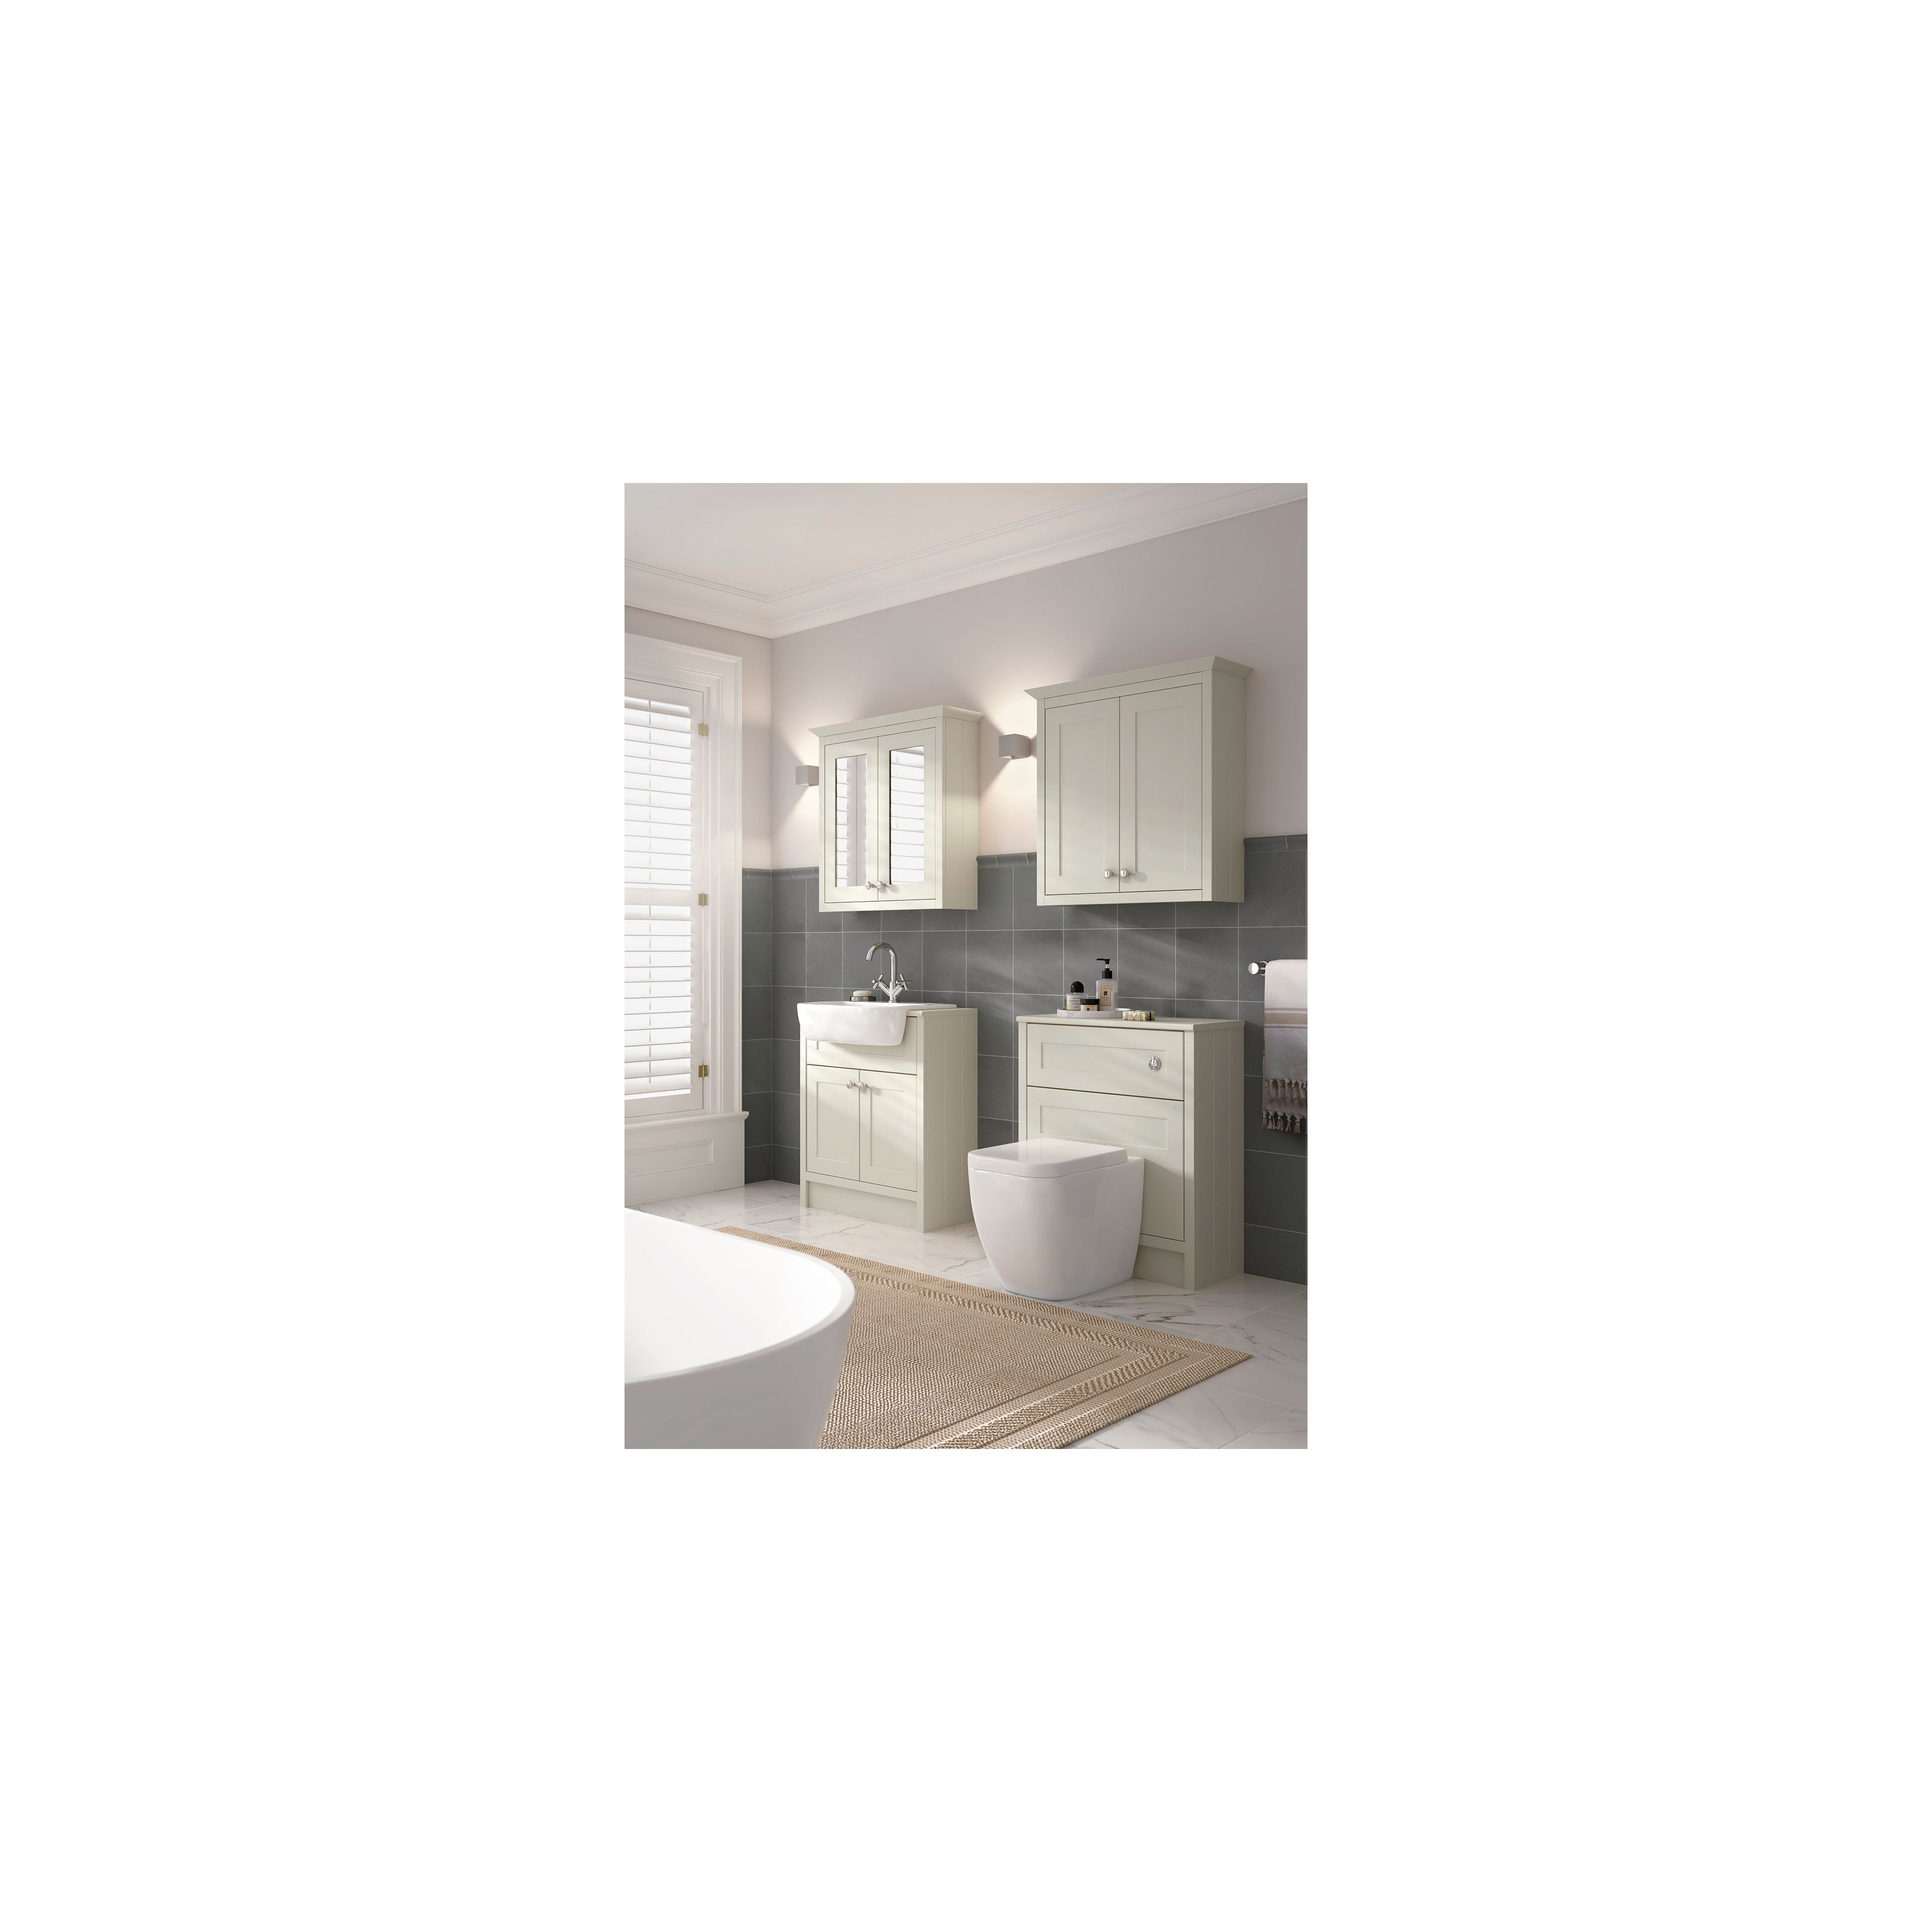 Schreiber Sage Bathroom Wall Cabinet for size 4000 X 4000